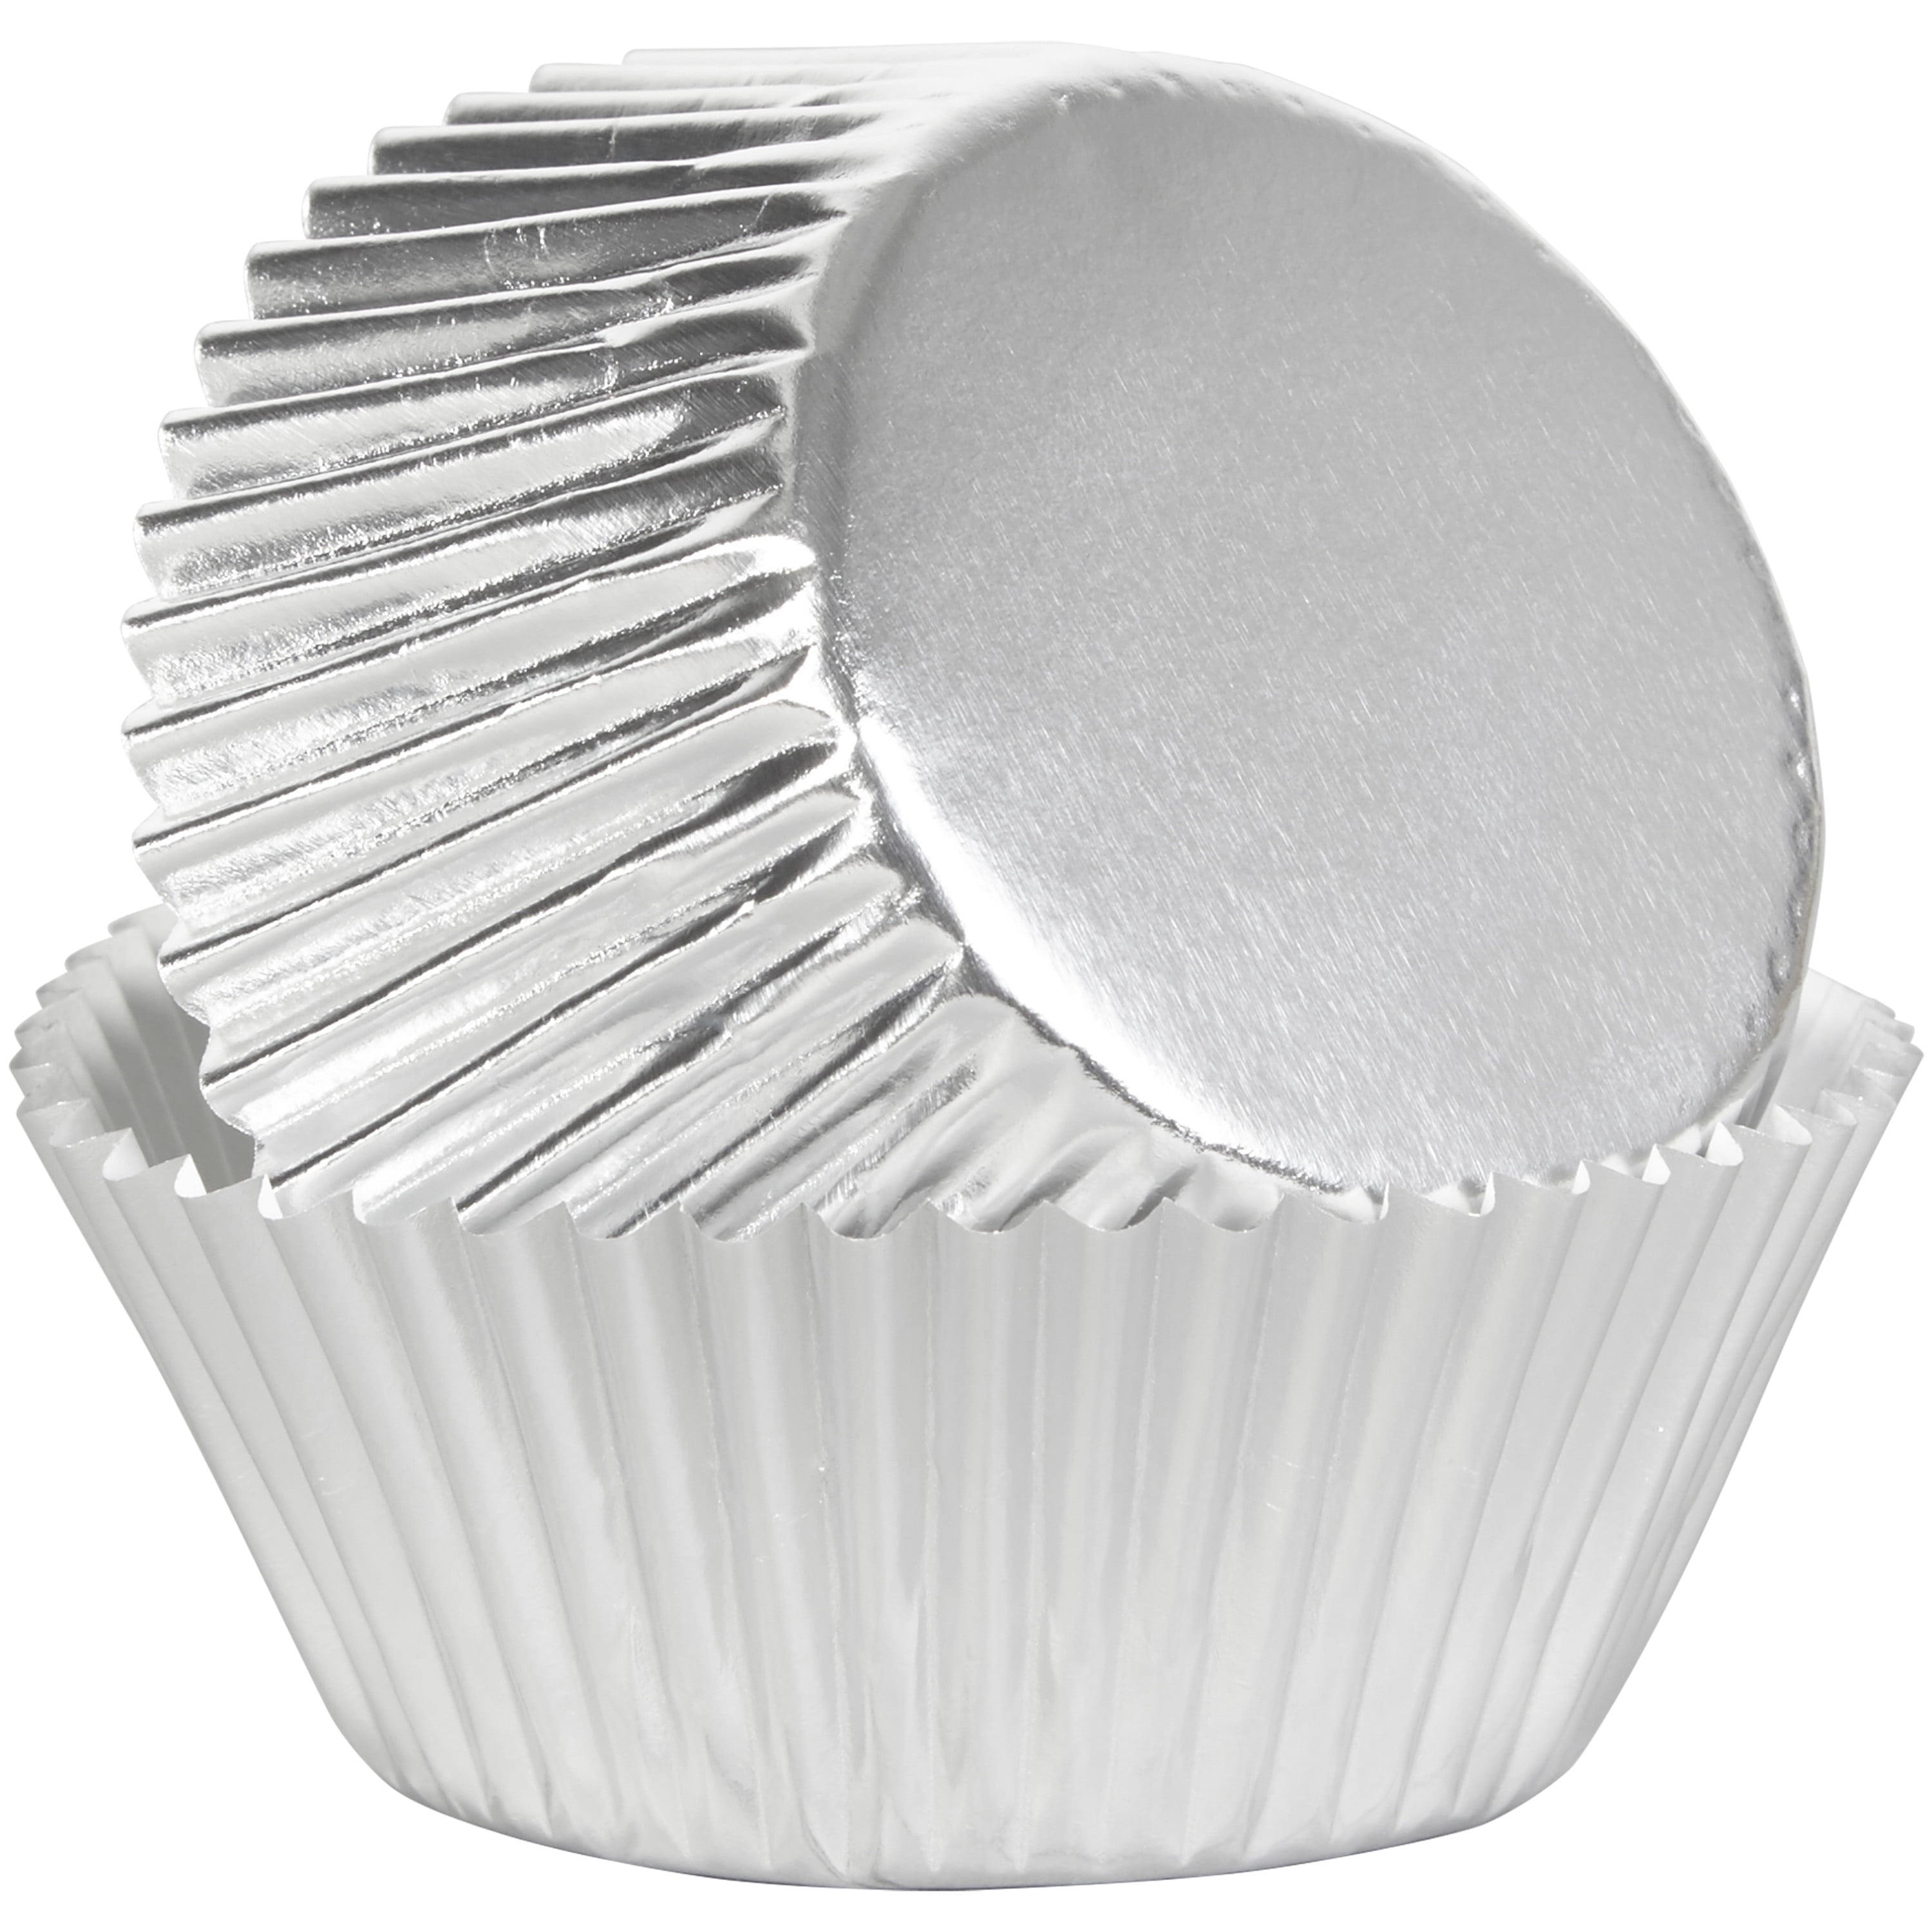 600 Mini Cupcake Cases Baking Muffin Cake Petits Fours Silver Foil Bulk Pack